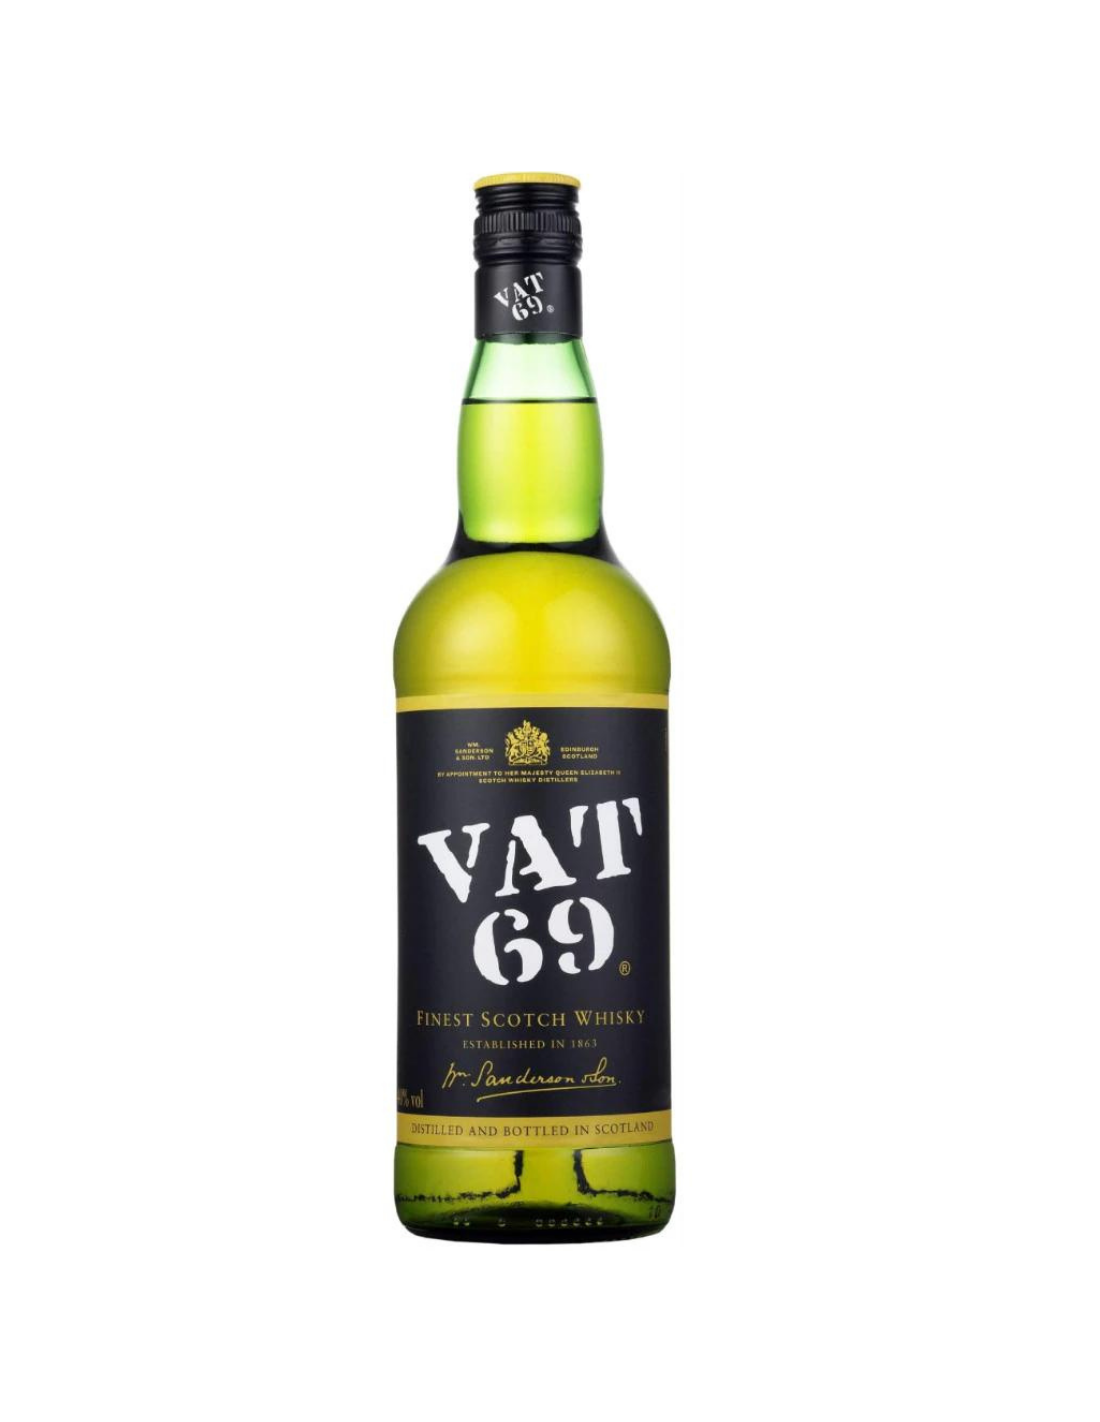 Whisky Vat 69, 0.7L, 40% alc., Scotia alcooldiscount.ro